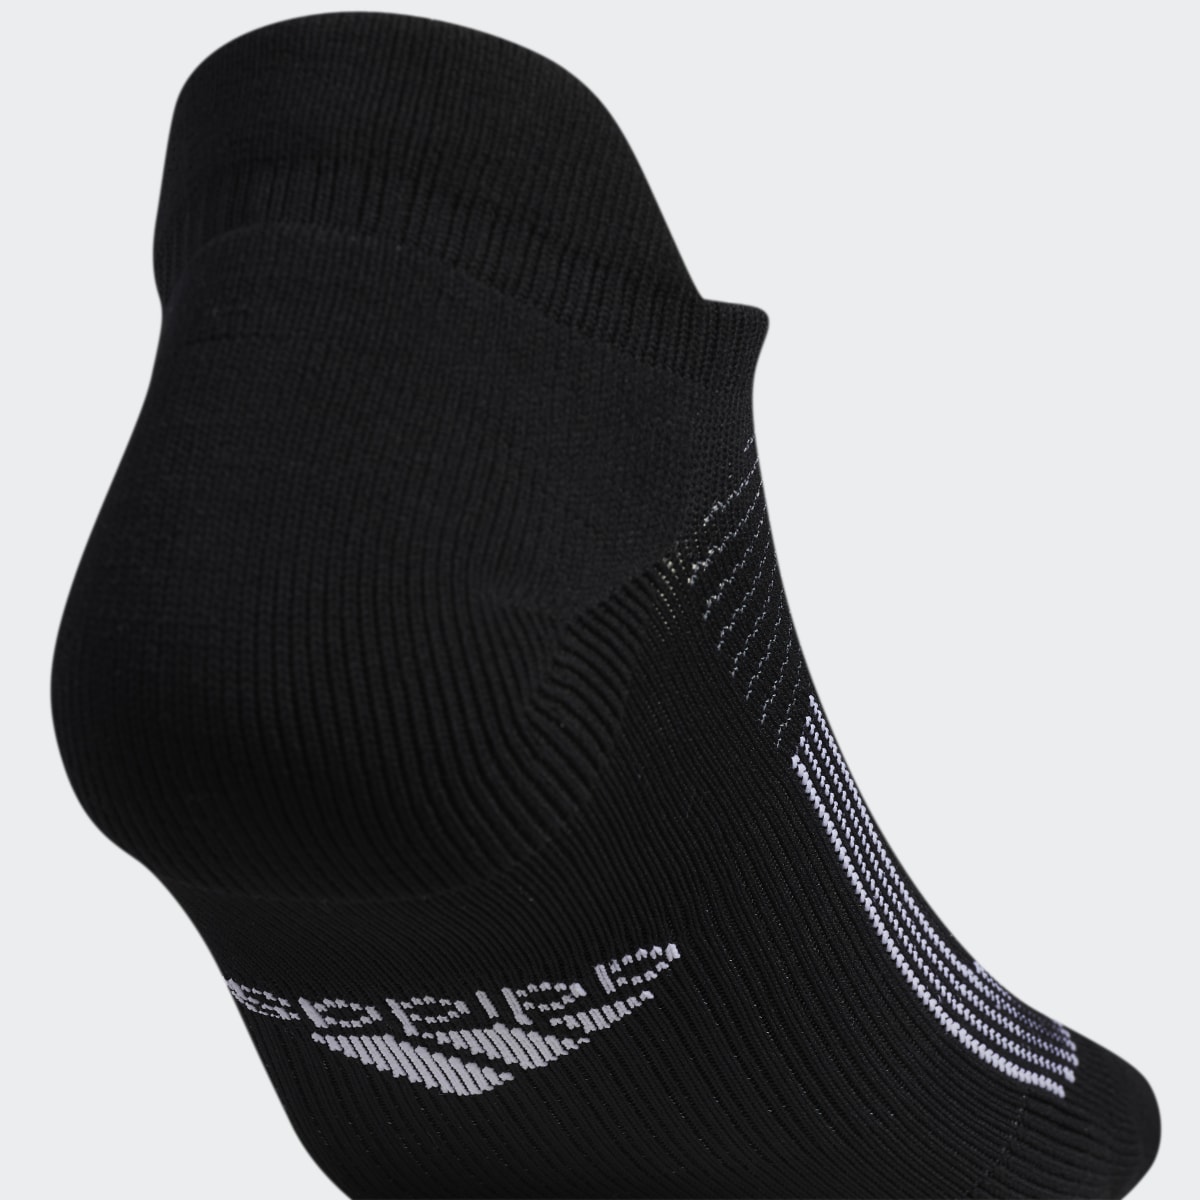 Adidas Superlite Ultraboost Tabbed No-Show Socks 2 Pairs. 5